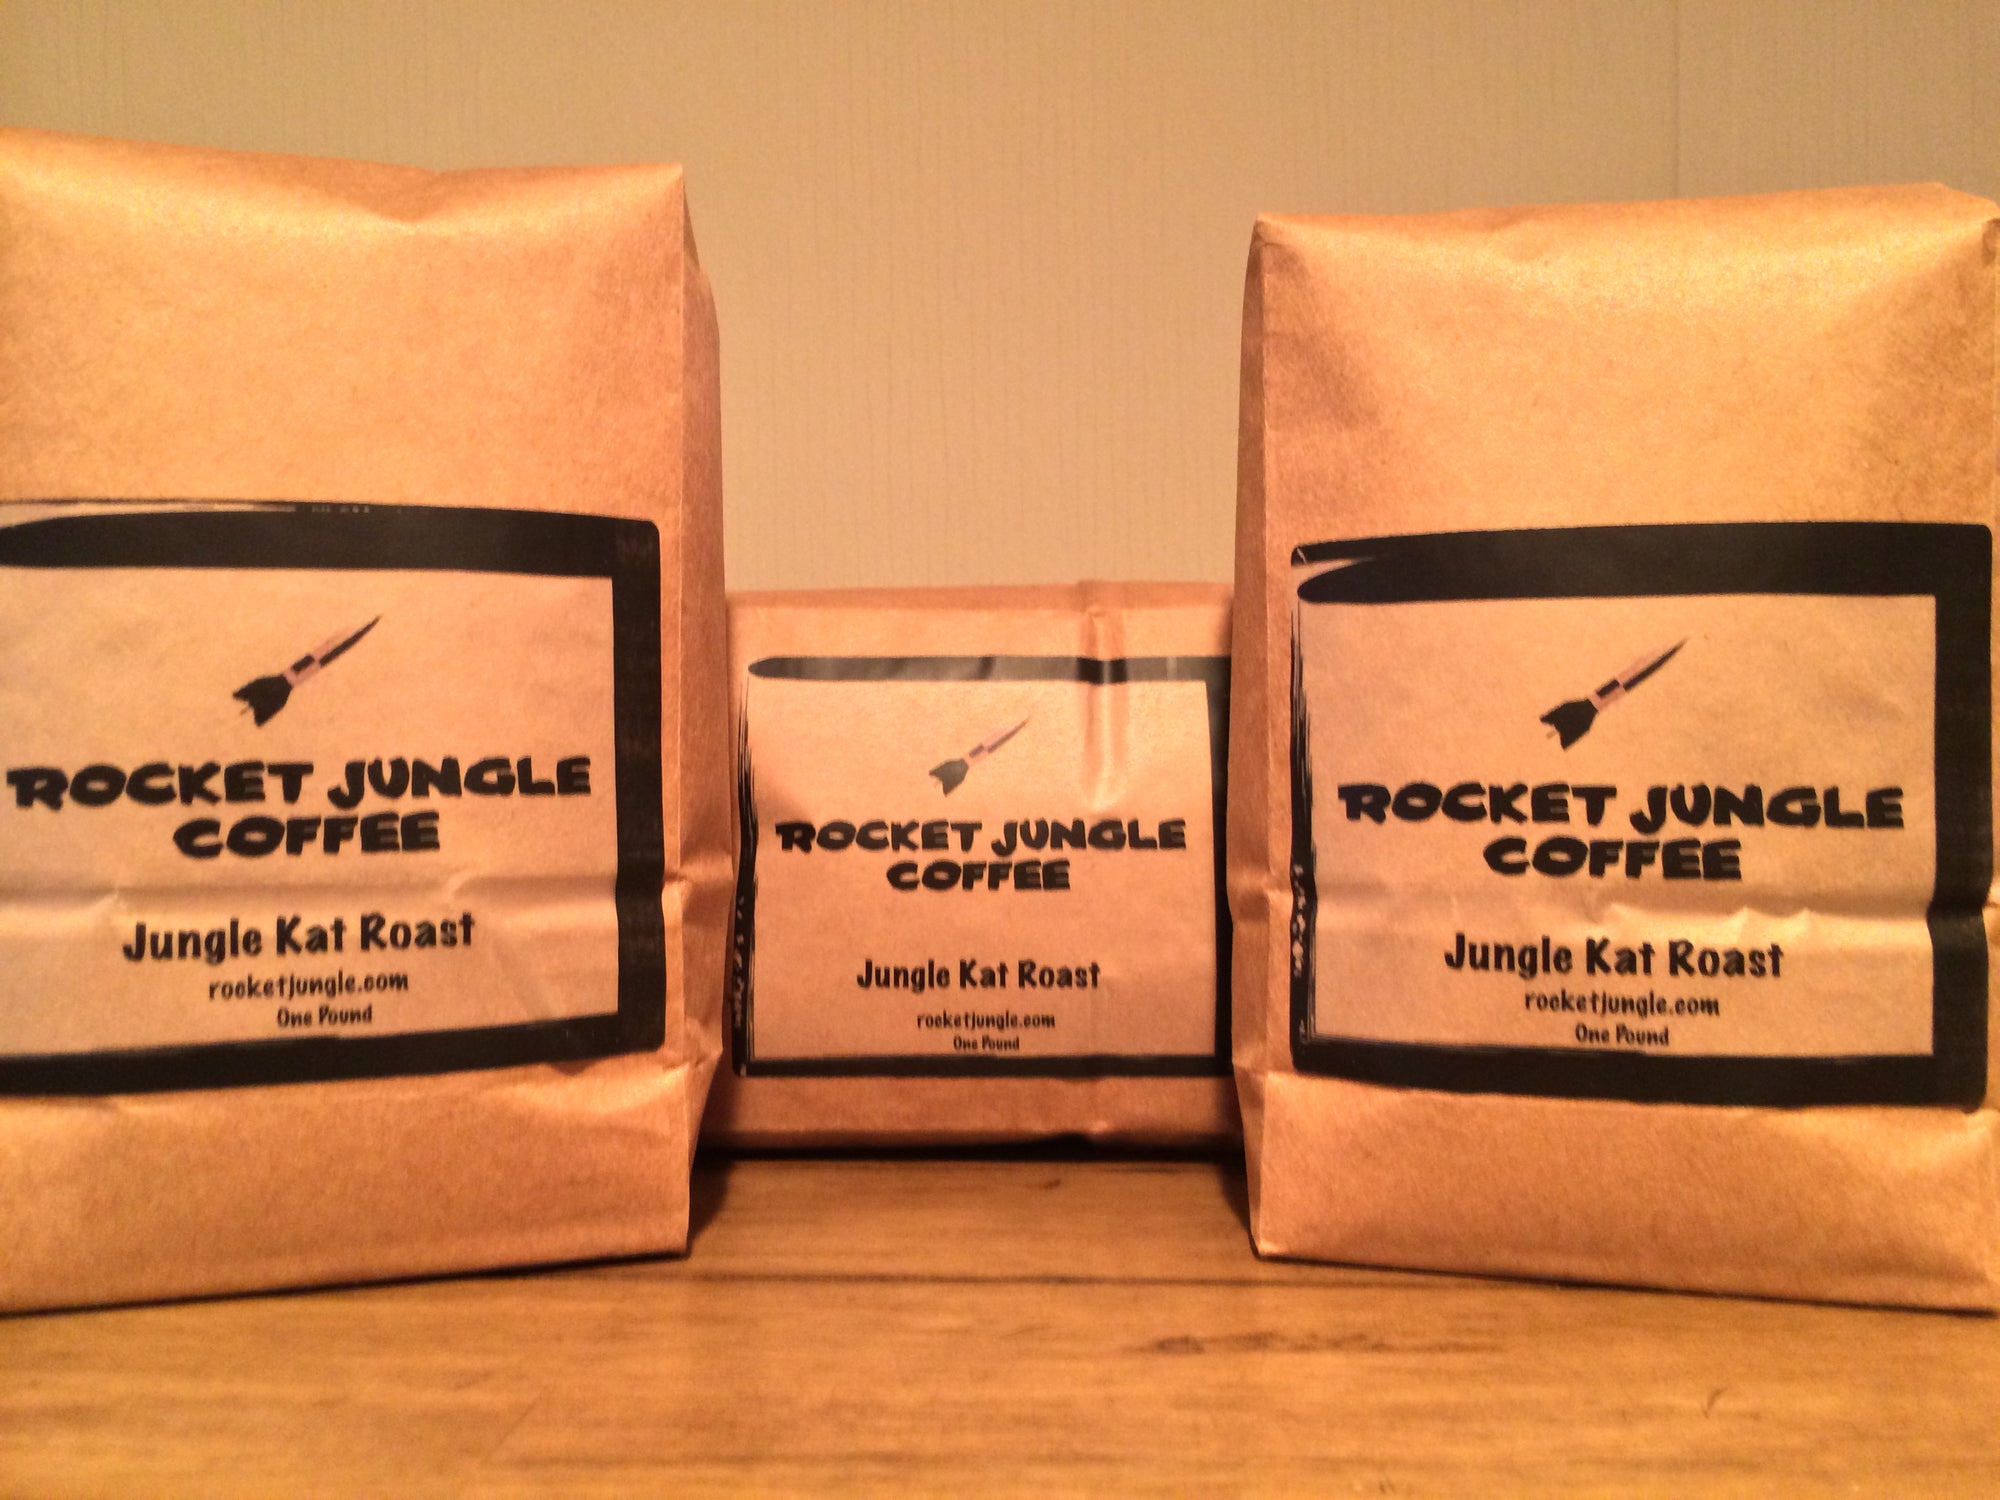 Rocket Jungle Coffee - Jungle Kat Roast